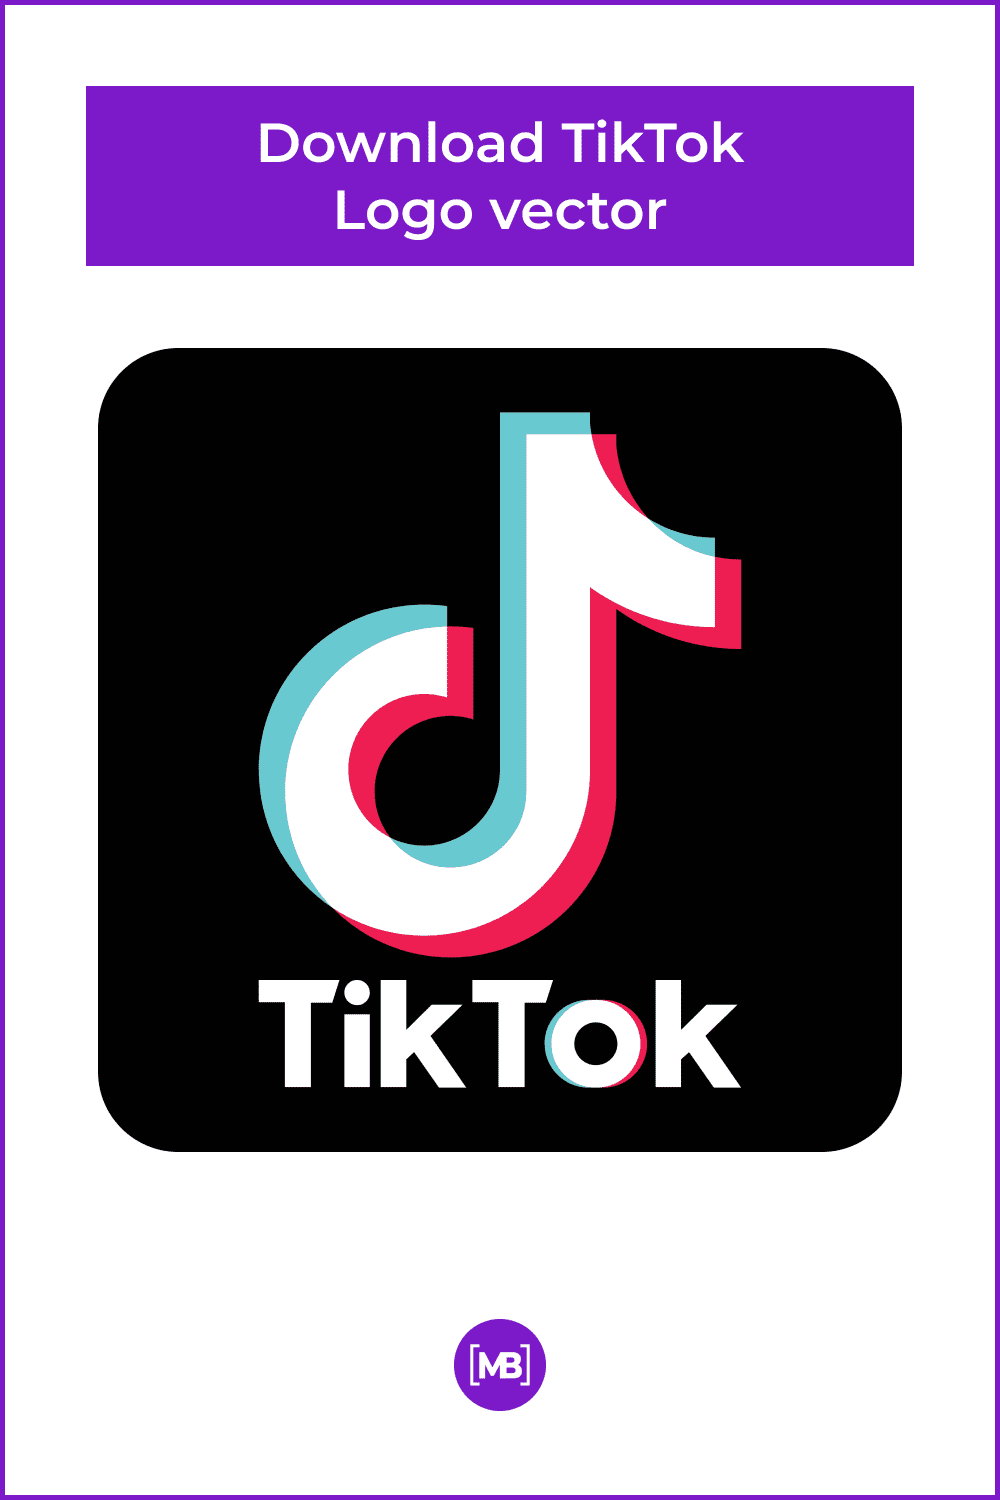 Download TikTok Logo vector.